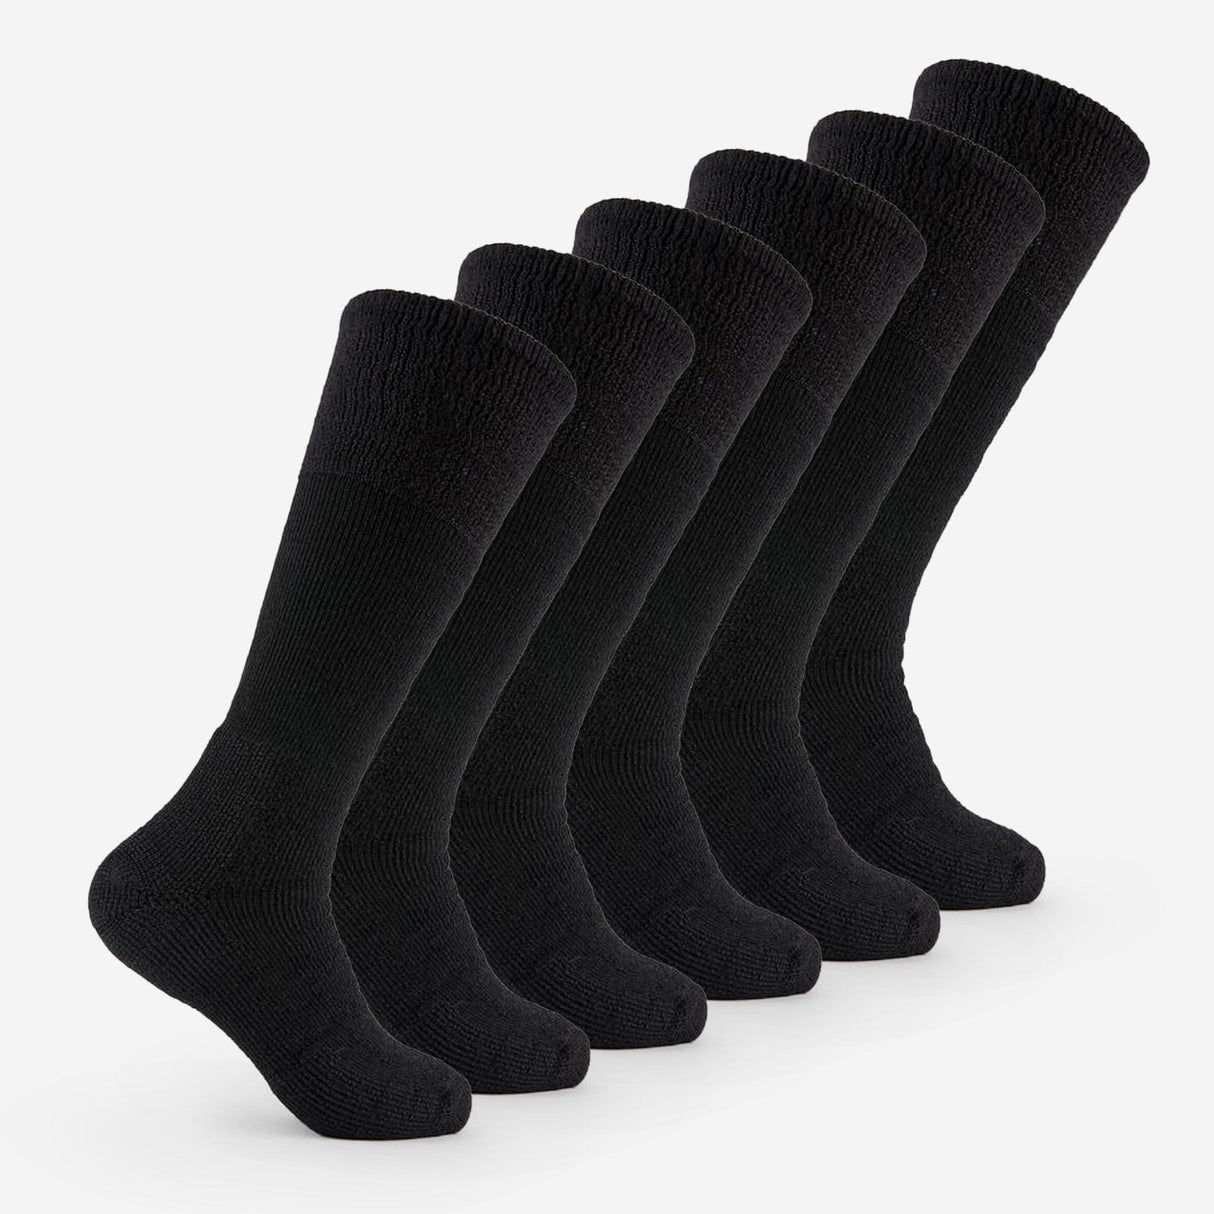 Thorlo Military Maximum Cushion OTC Socks  -  Medium / Black / 6-Pair Pack